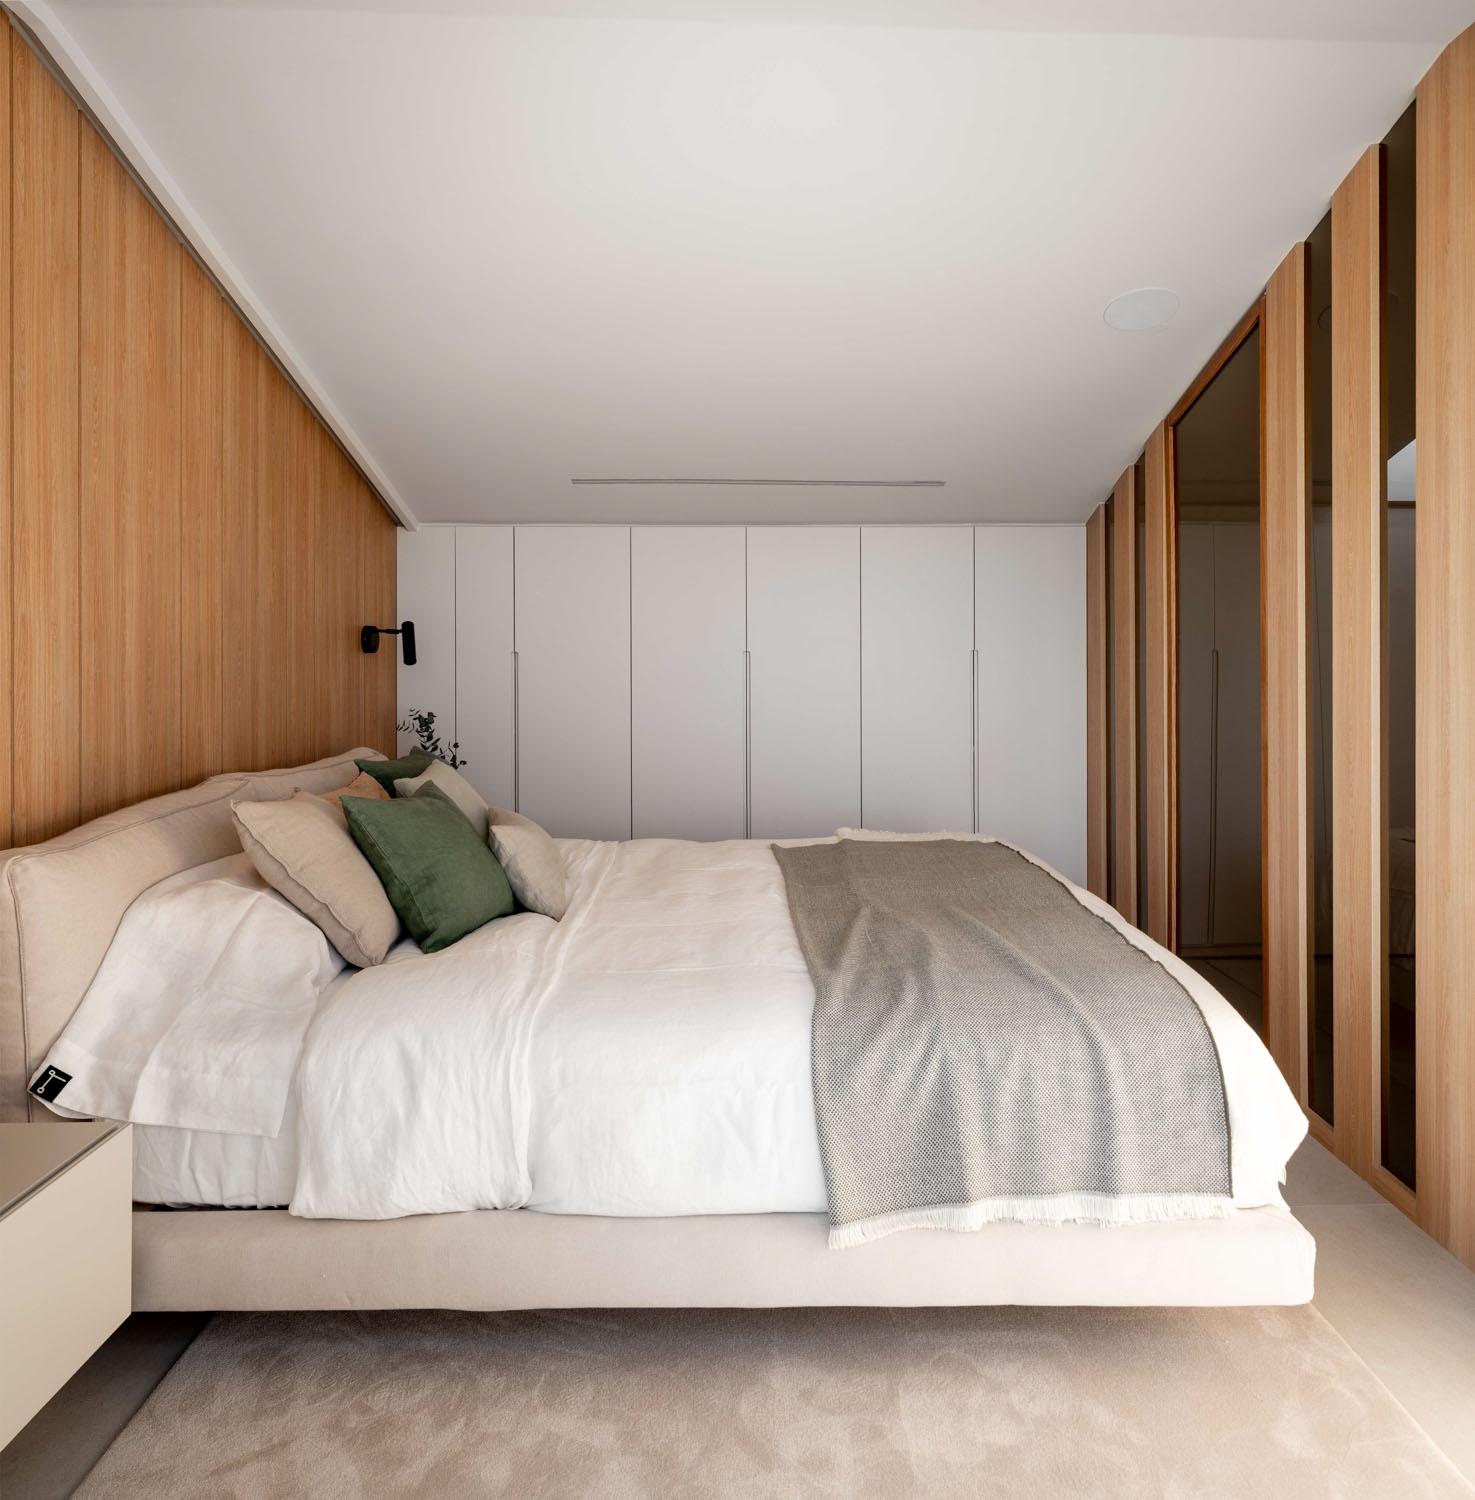 Imagen del dormitorio - Fotografía de arquitectura e interiores por Biderbost Photo